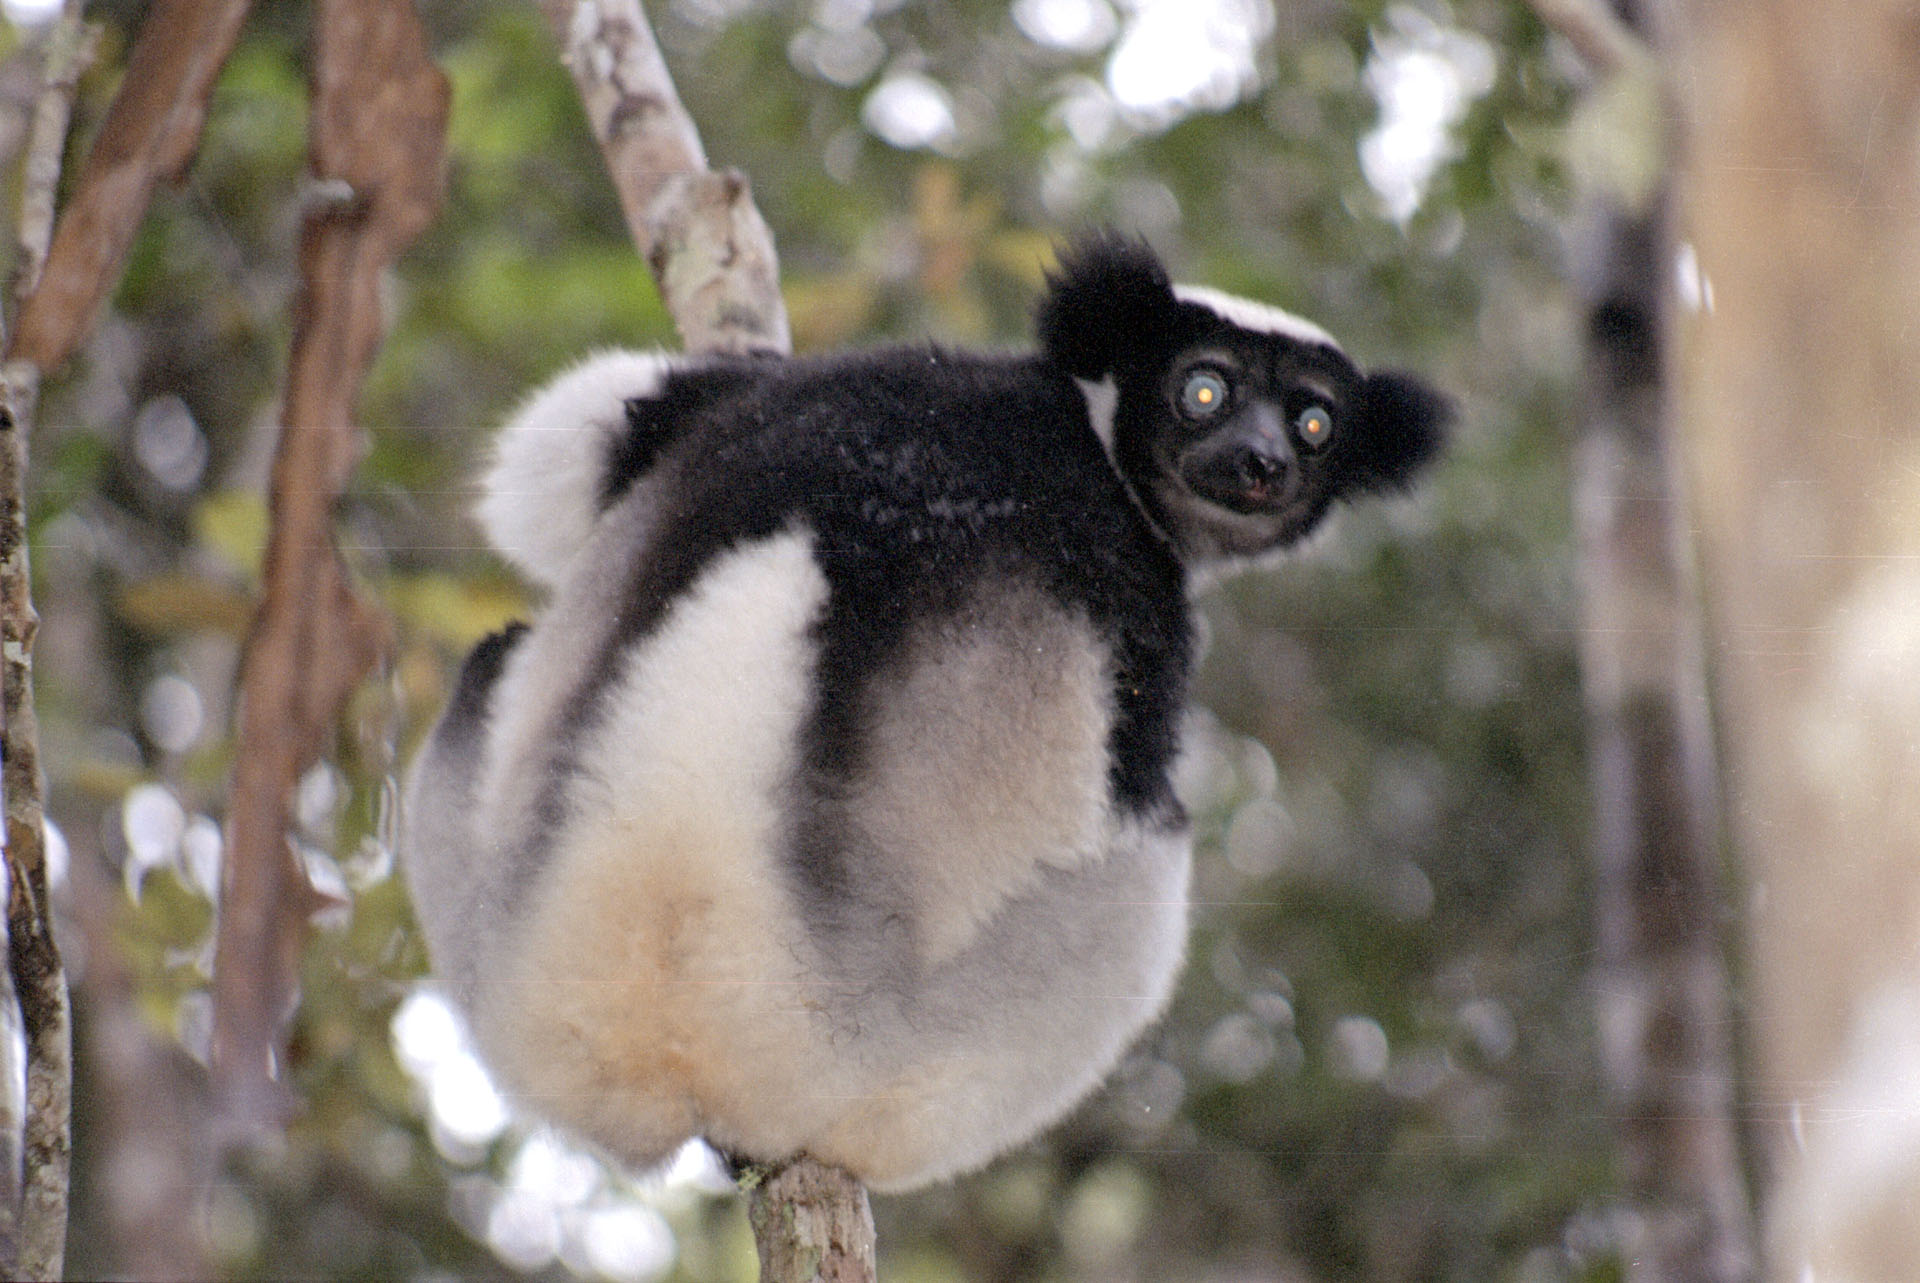 Réserve spéciale d'Analamazoatra - Madagascar